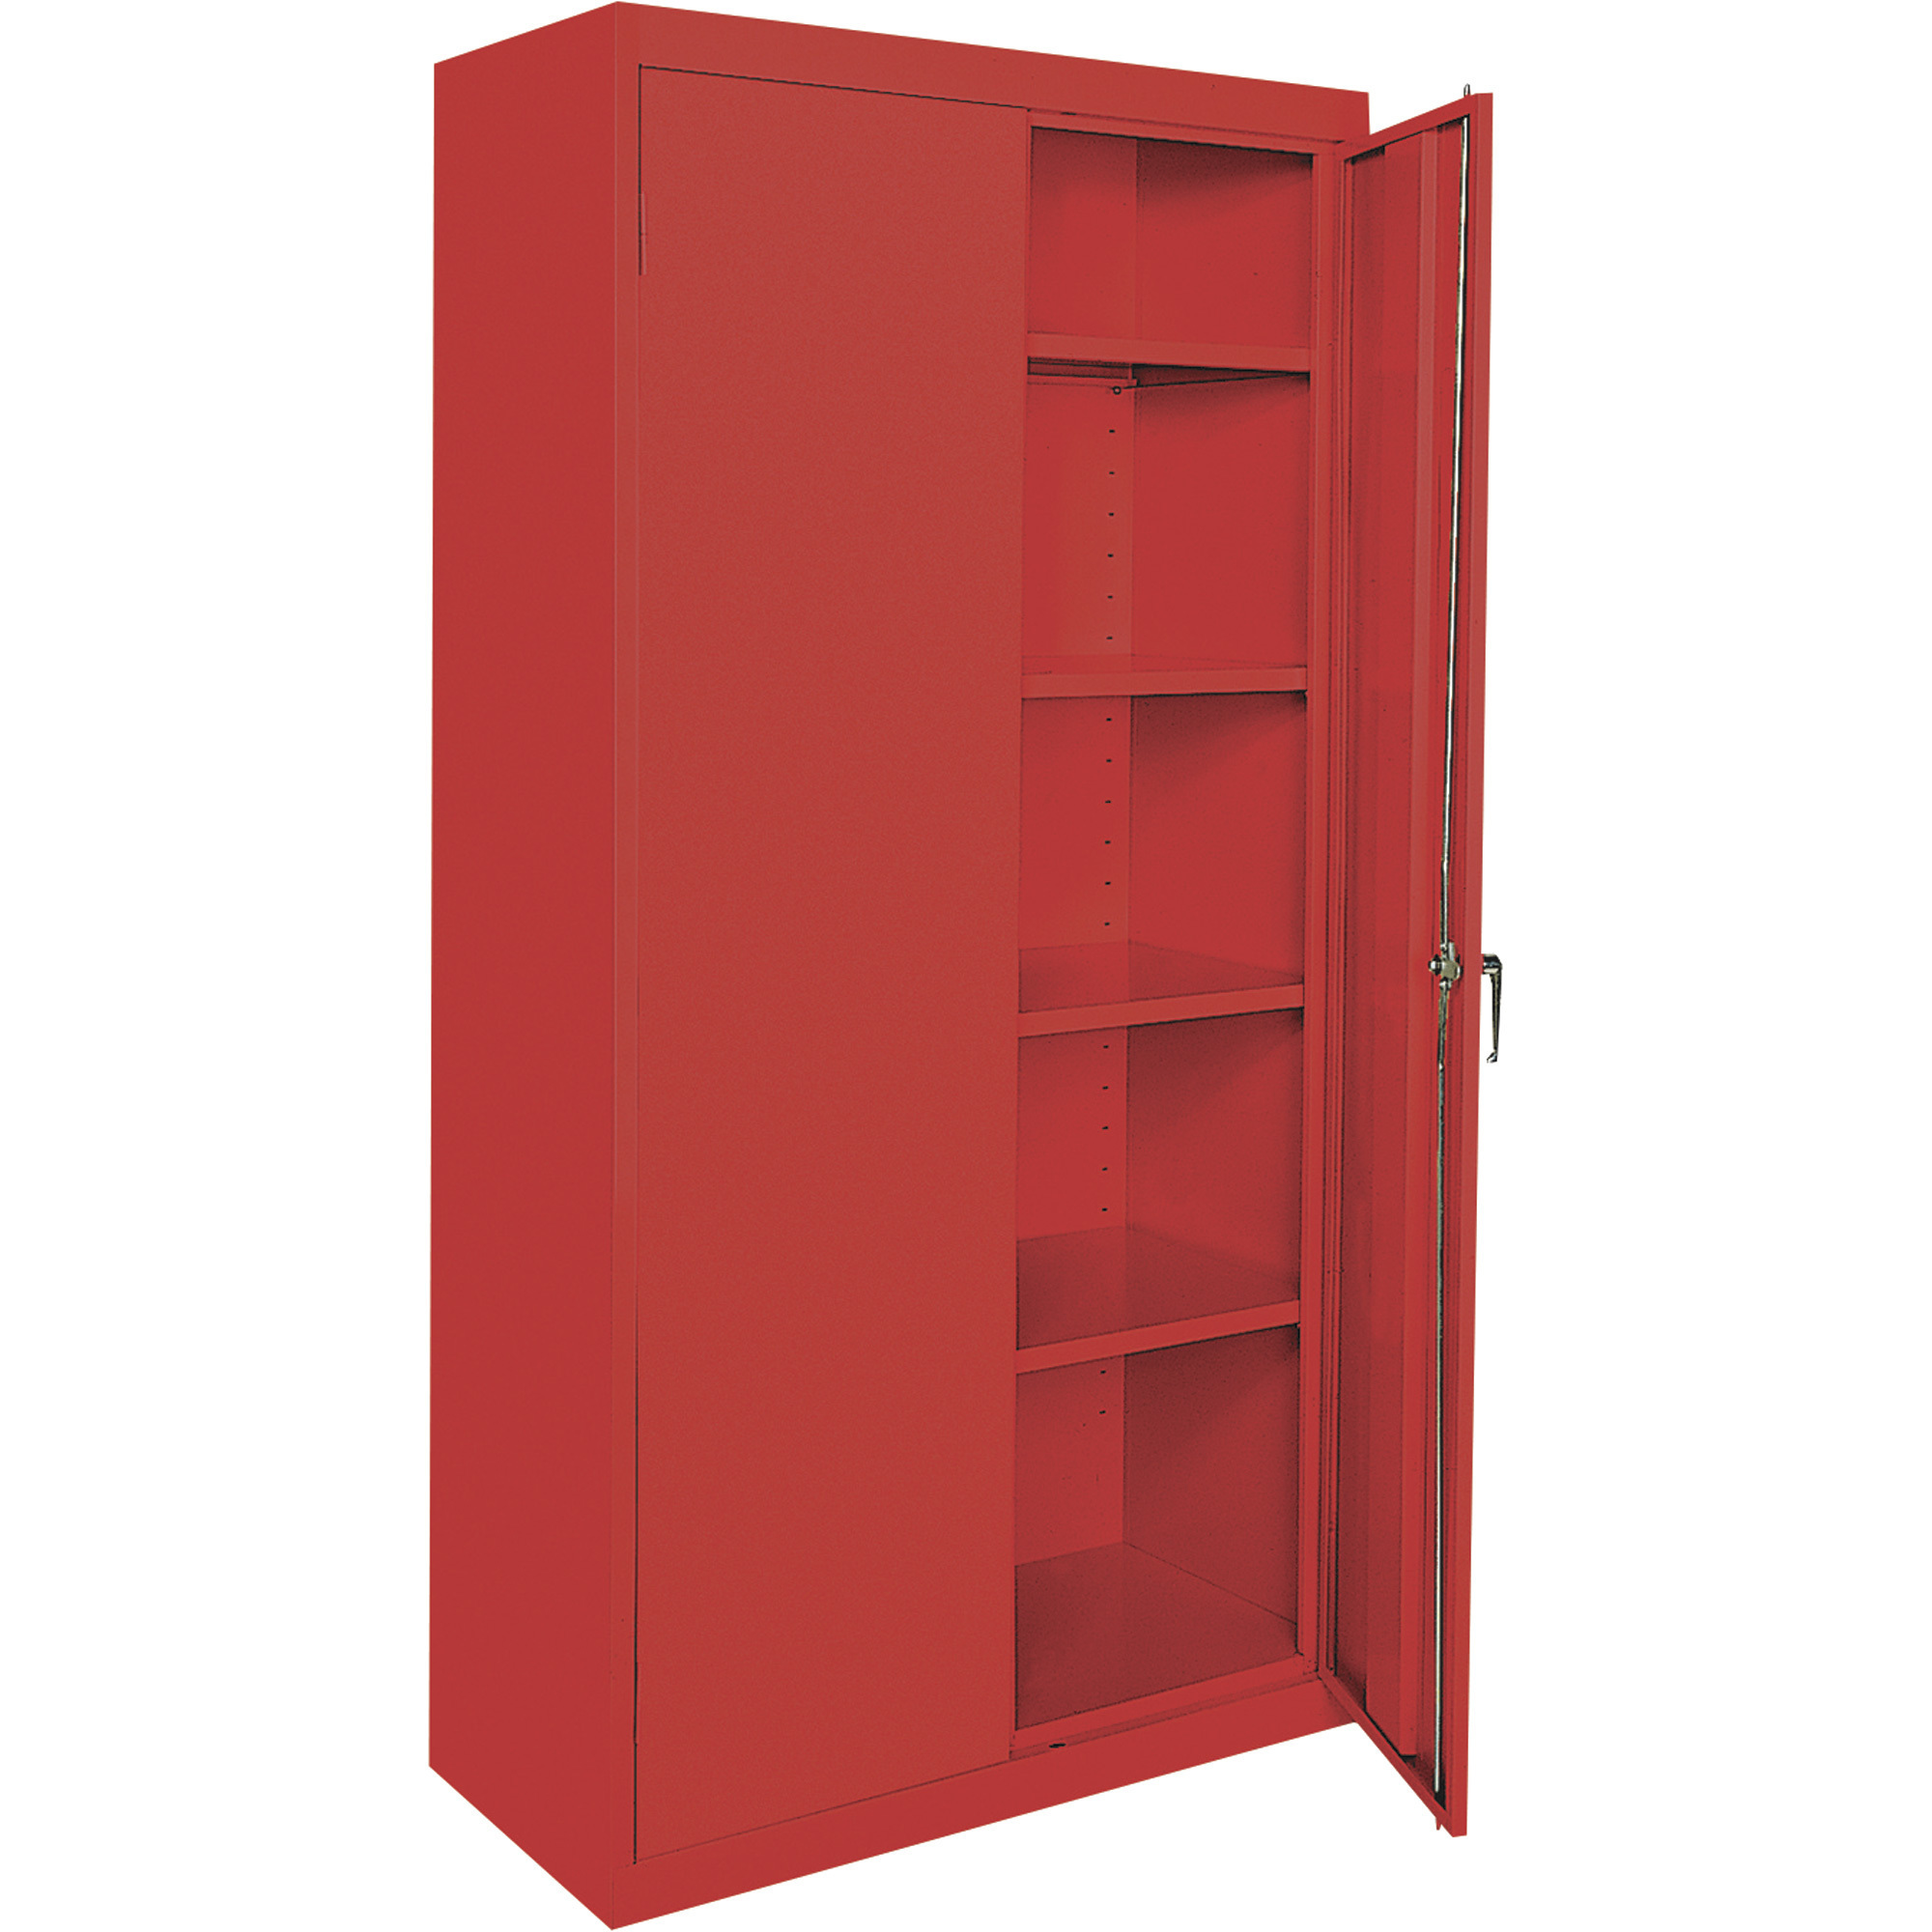 Sandusky Lee Commercial Grade All Welded Steel Cabinet, 36Inch W x 24Inch D x 72Inch H, Red, Model CA41362472-01